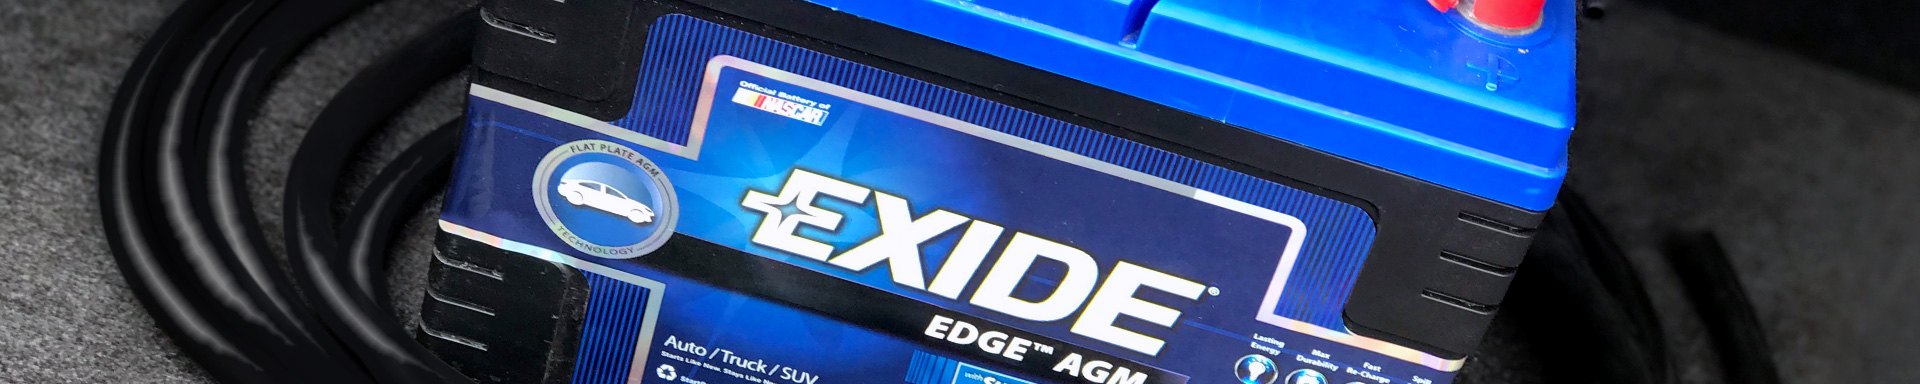 Exide™  Semi Truck AGM Batteries 